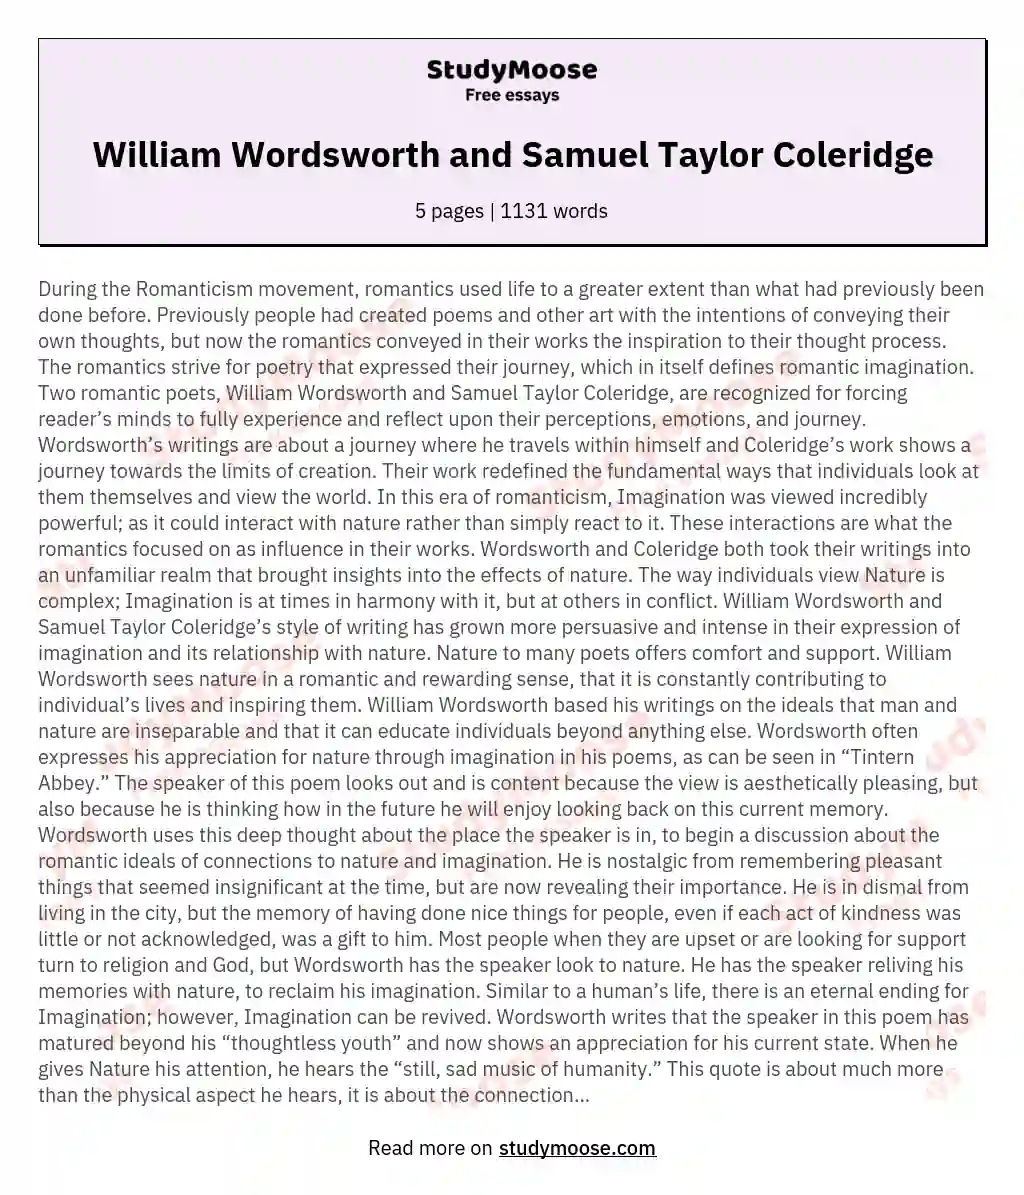 William Wordsworth and Samuel Taylor Coleridge